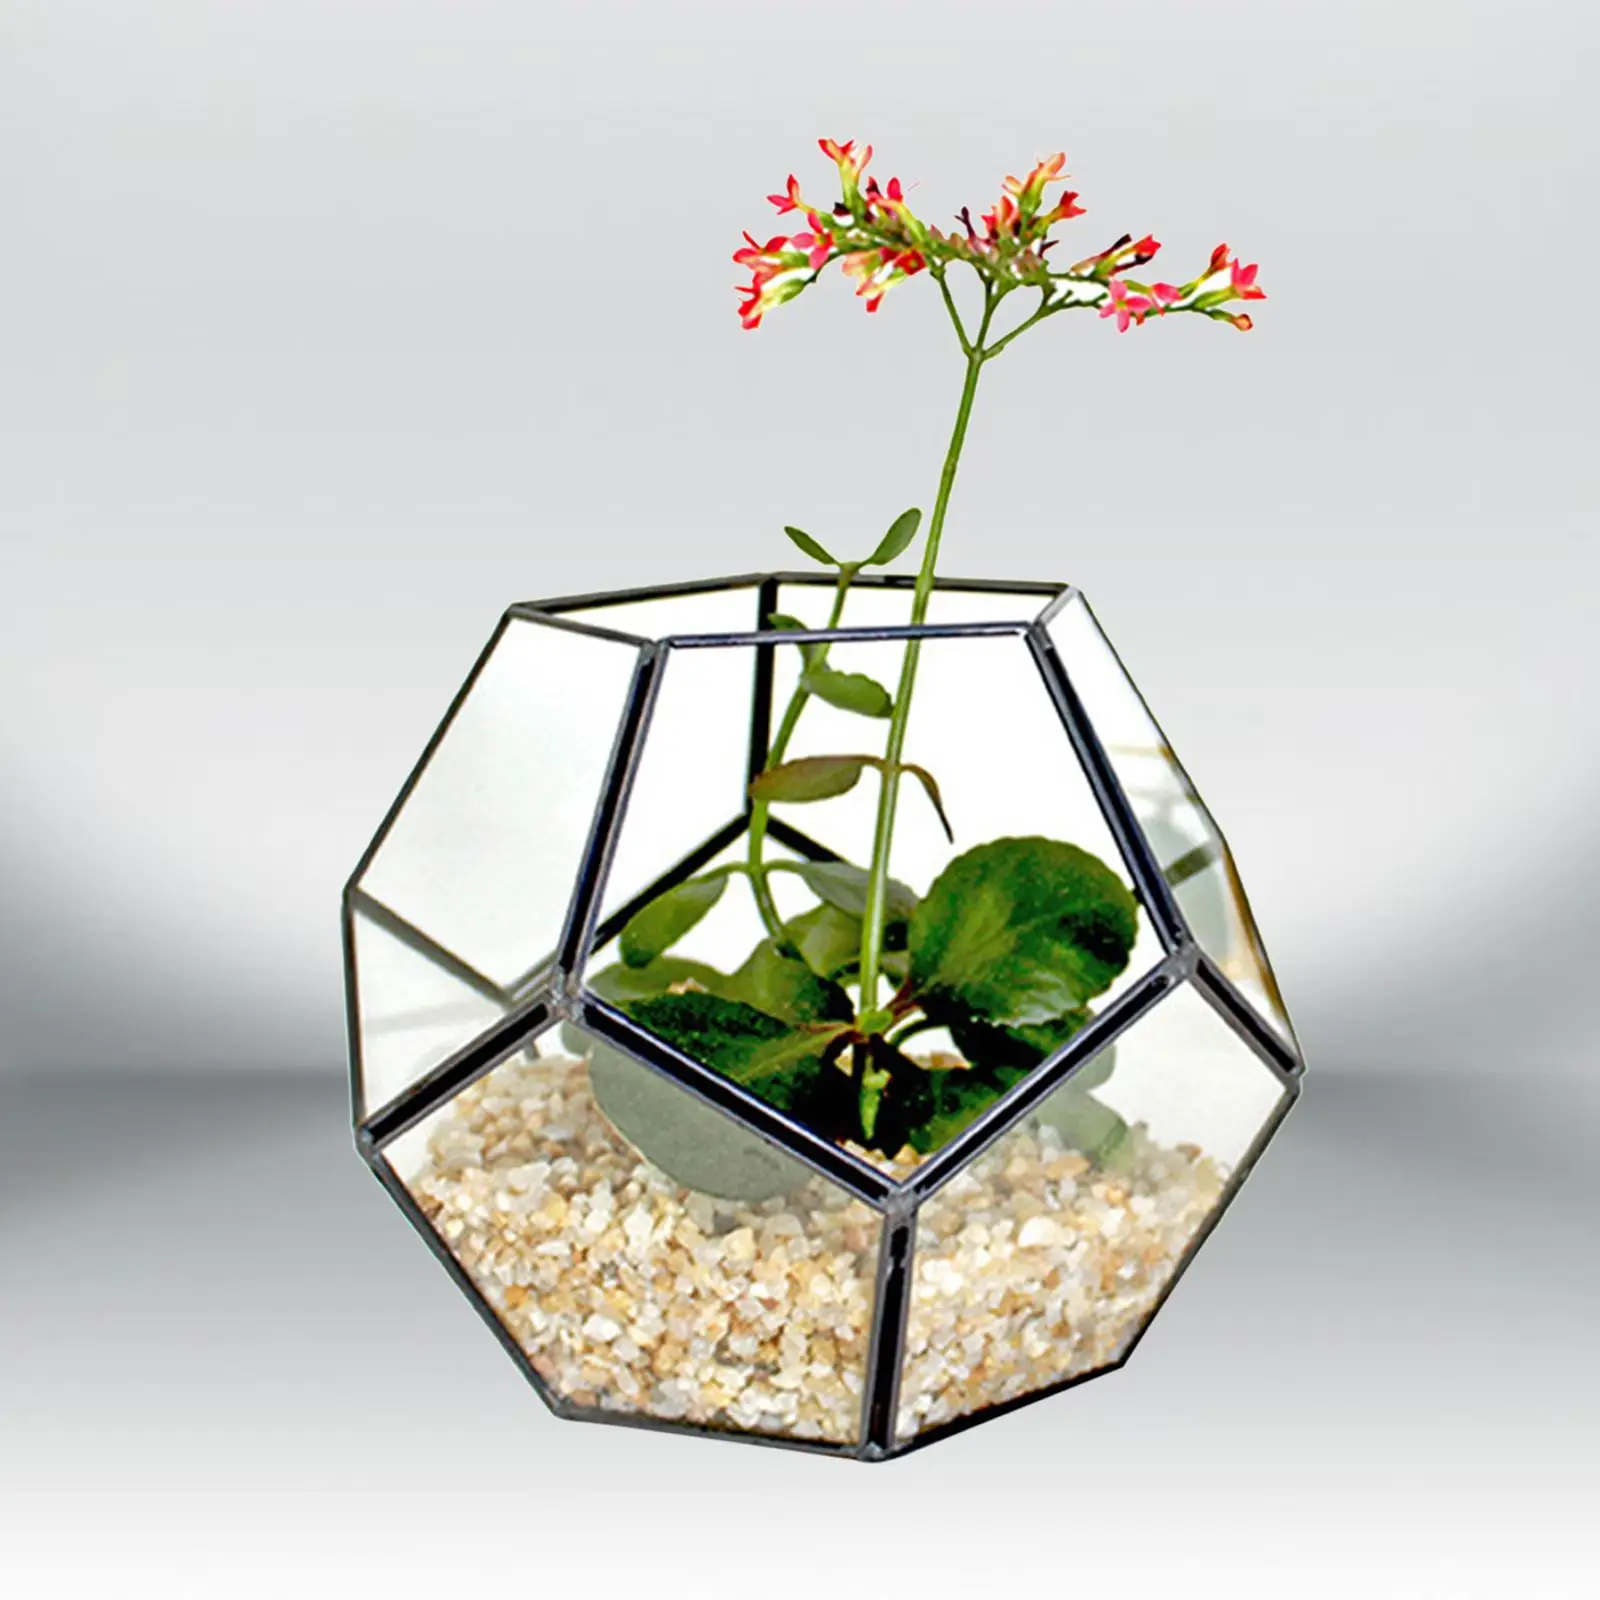 Glass Ornaments, Geometric Terrarium, Geometric Planter for Succulent, Cacti, Fern Air Plants Decor Gift